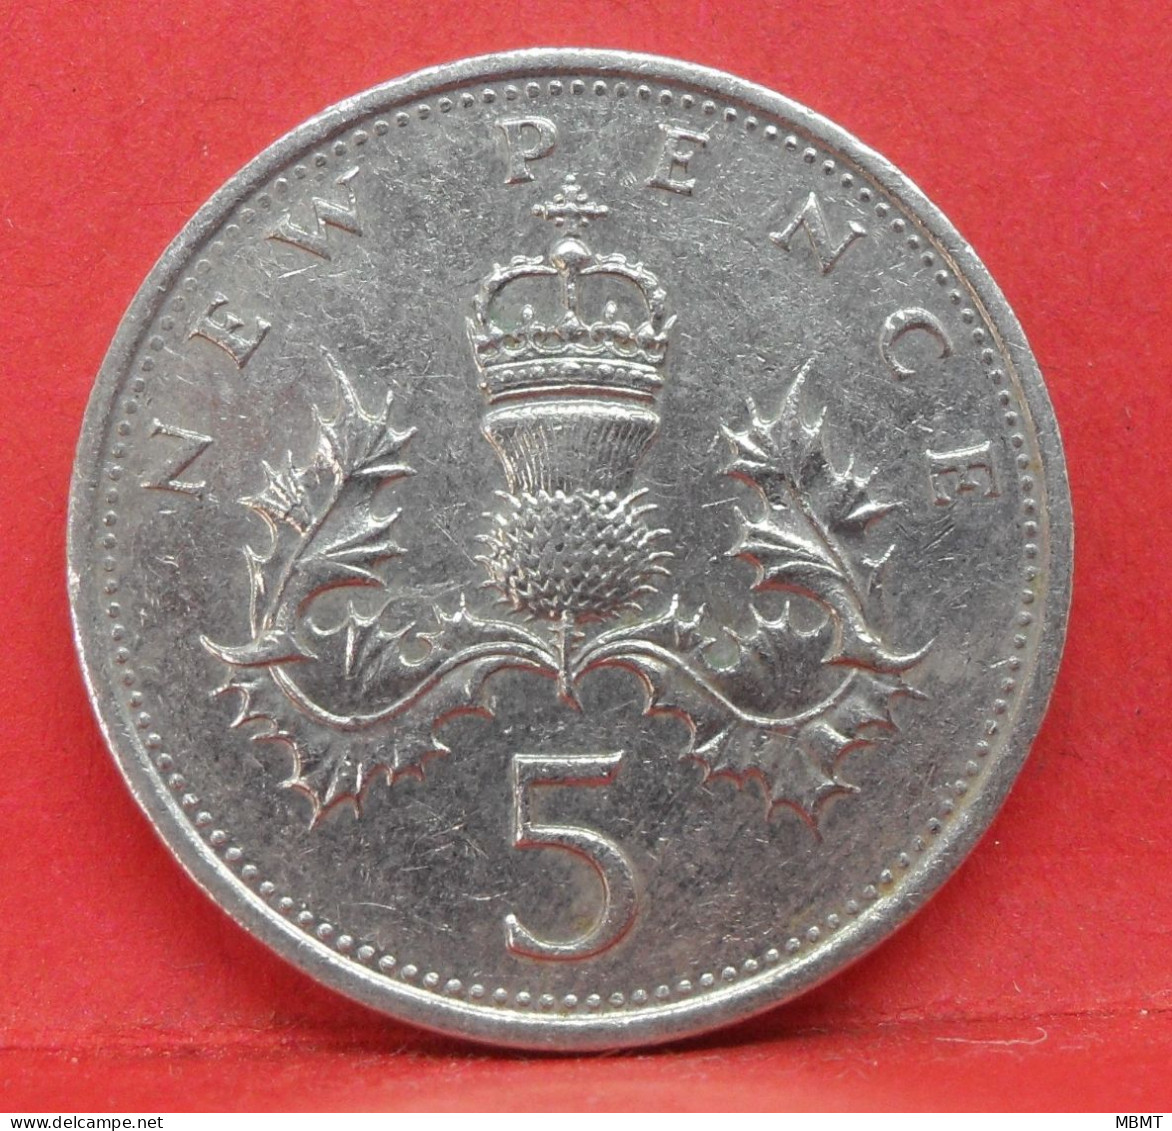 5 Pence 1980 - TB - Pièce Monnaie Grande-Bretagne - Article N°2773 - 5 Pence & 5 New Pence